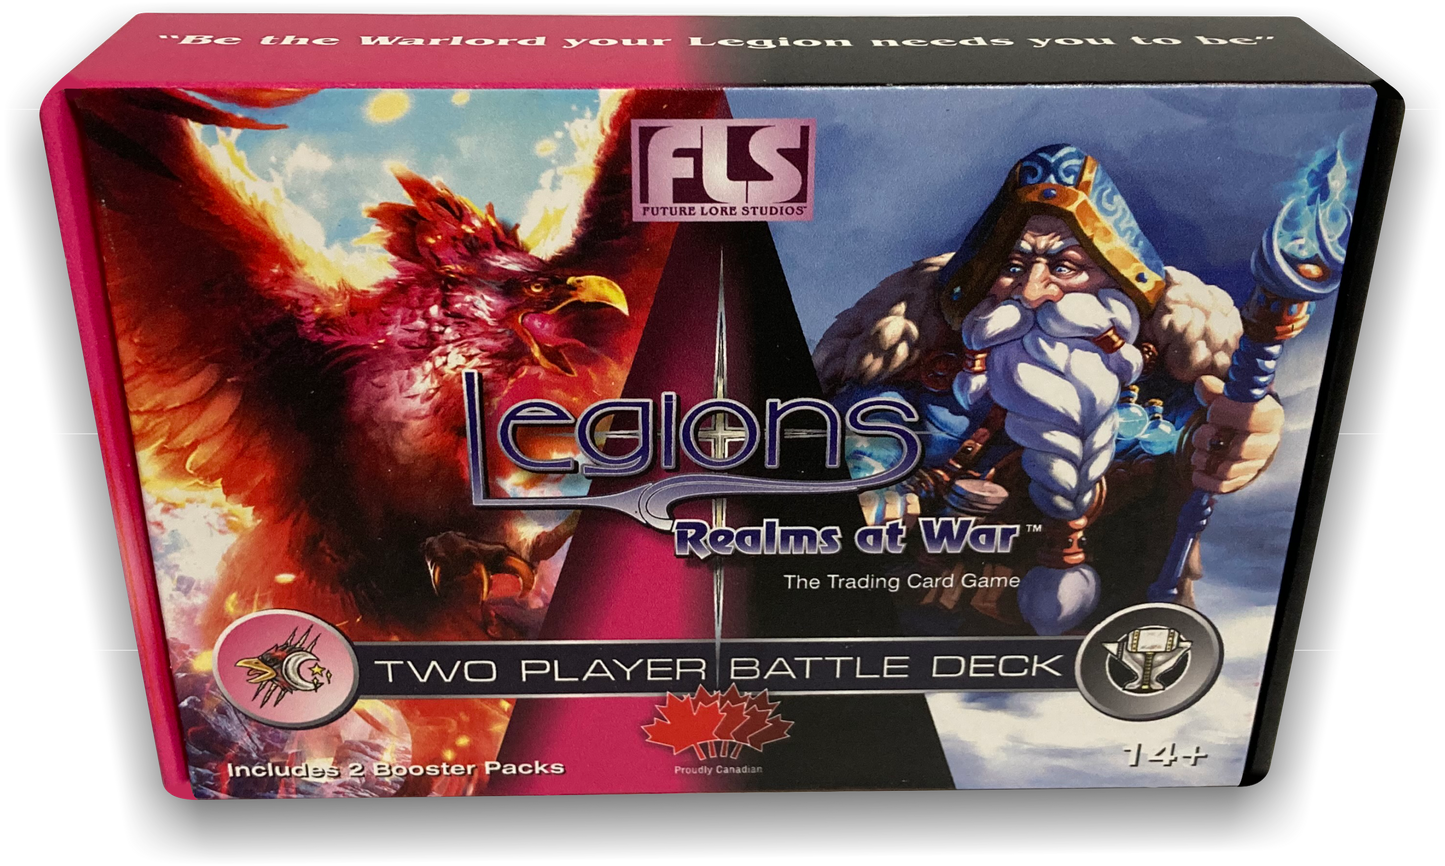 Black Friday Sale! - 2 Player Battle Deck - Legions Realms at War